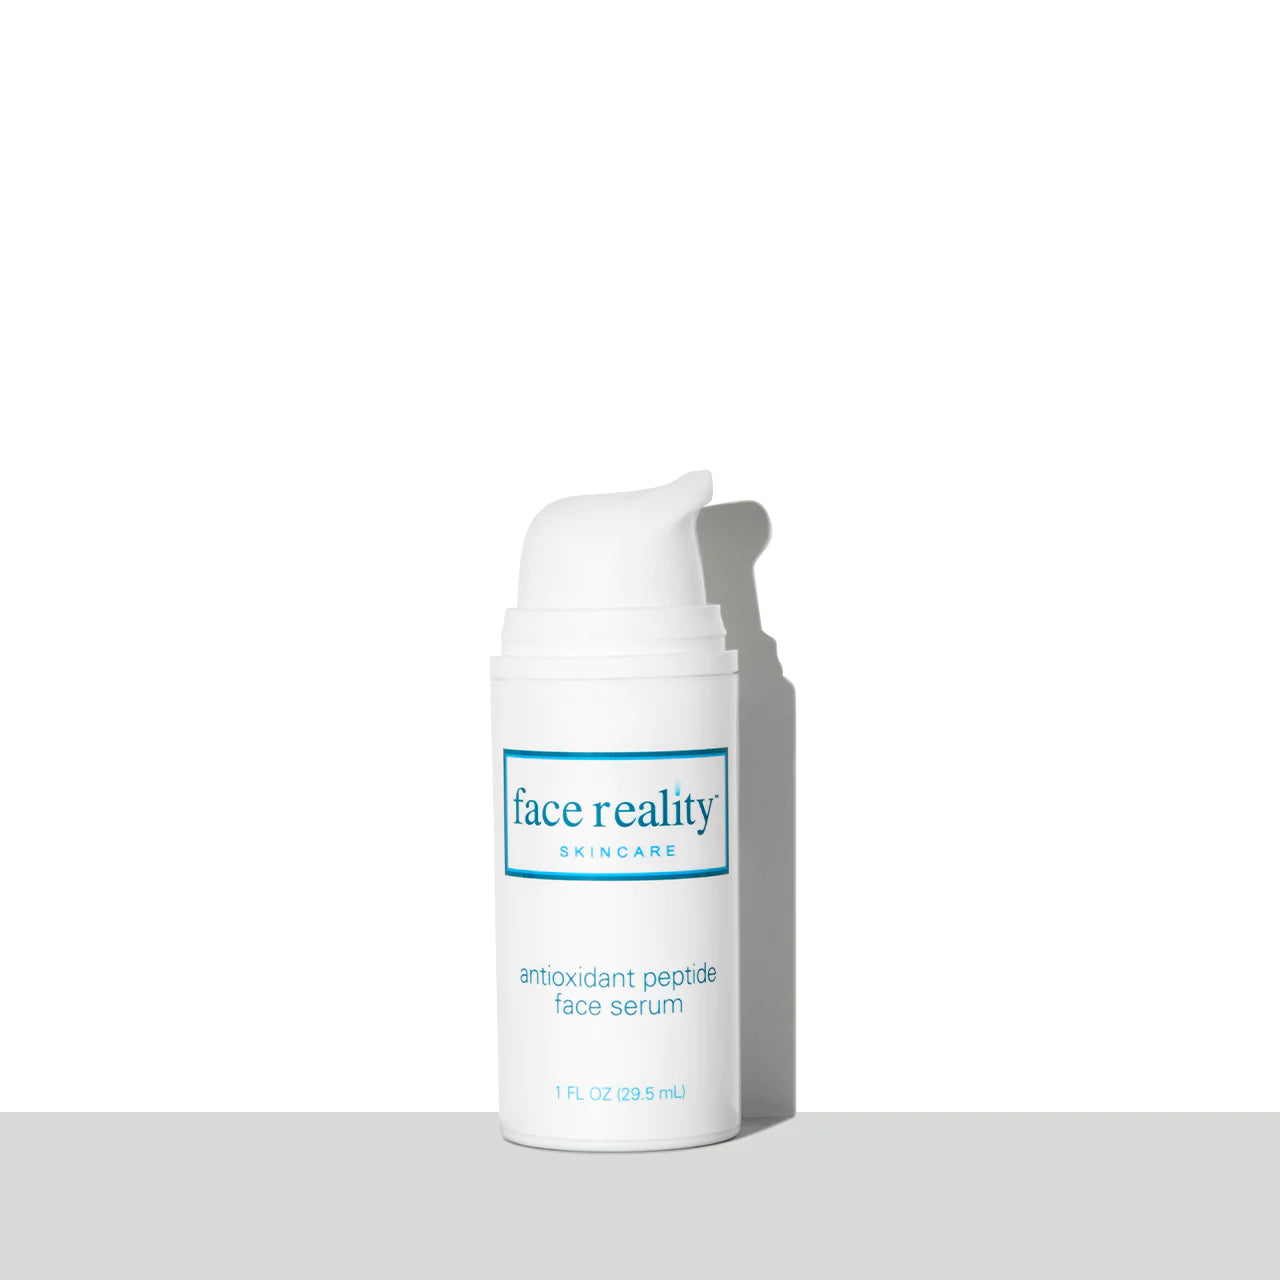 Face Reality - Antioxidant Peptide Face Serum